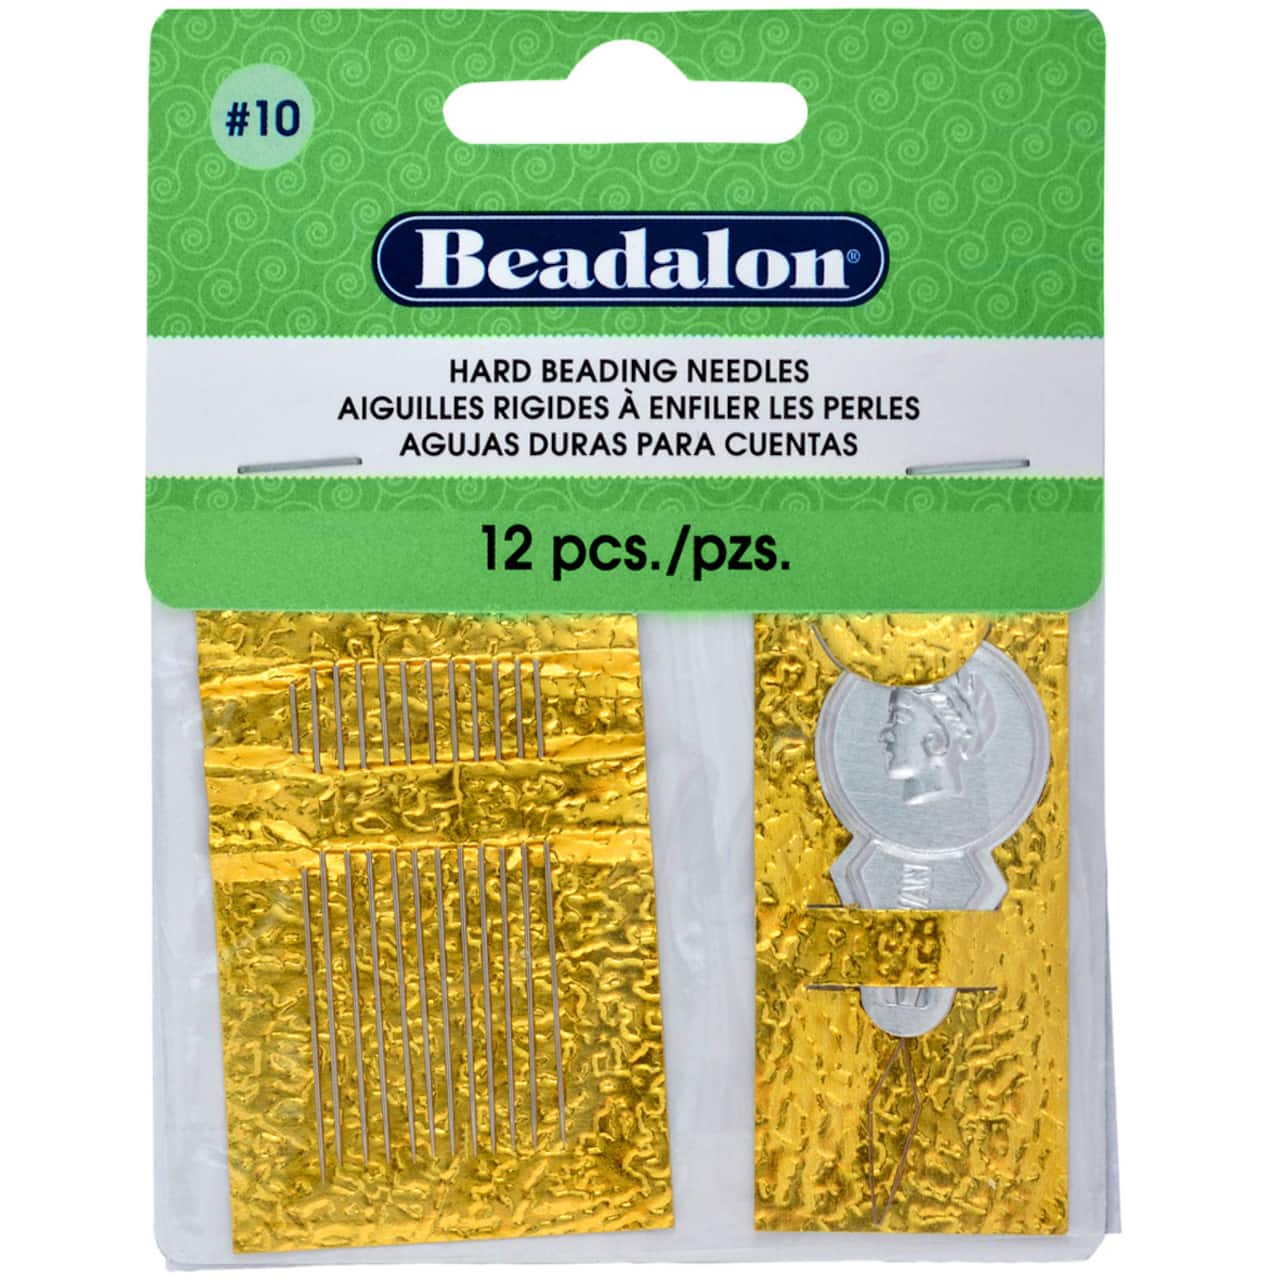 Beadalon&#xAE; Hard Beading Needles, Size 10